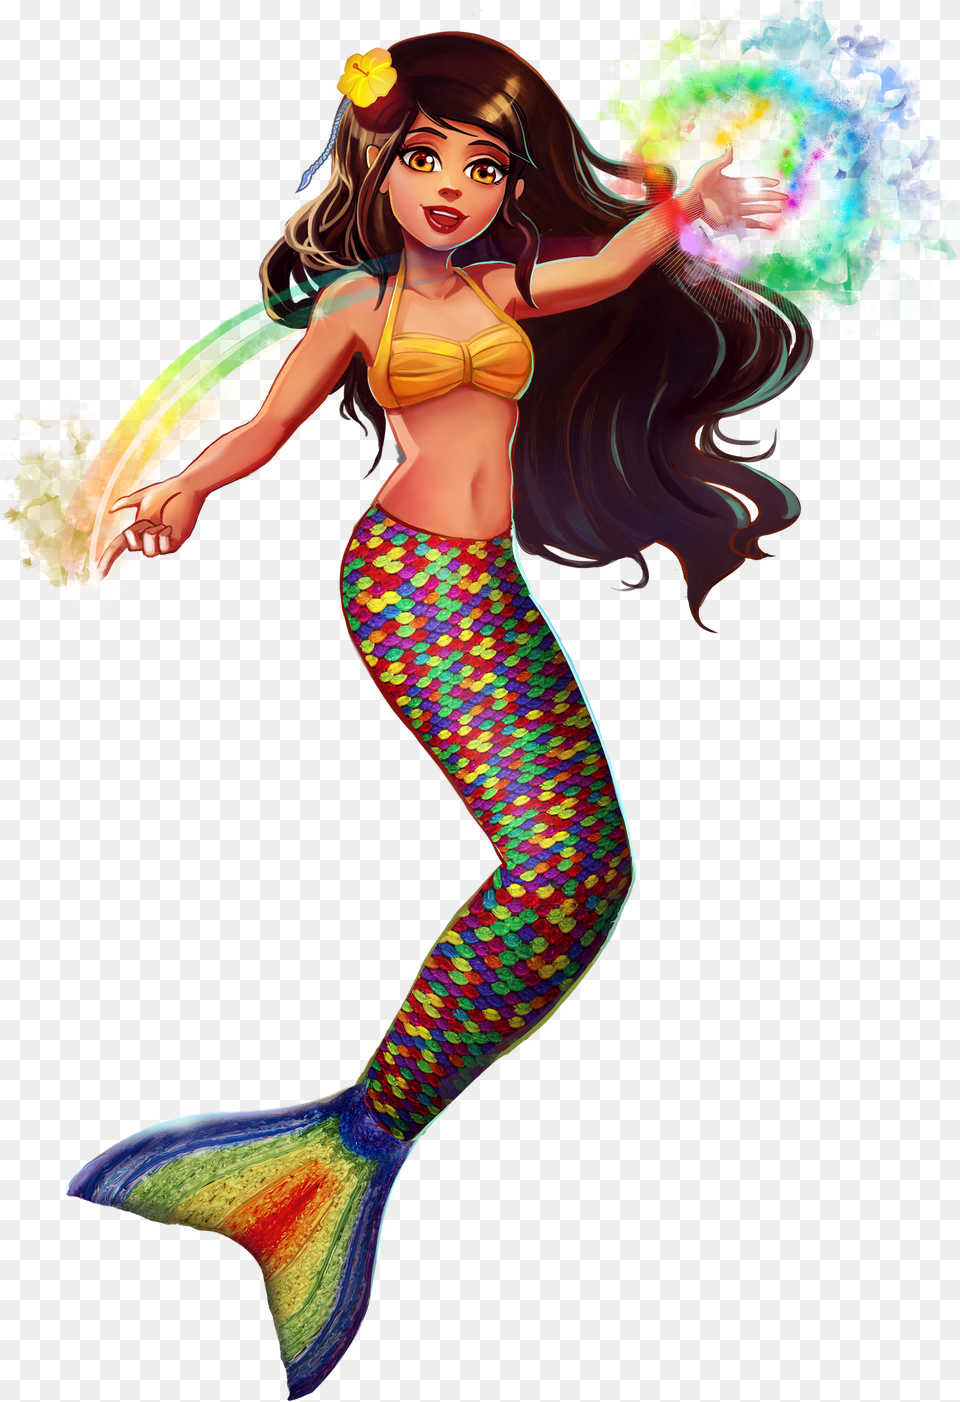 Mermaid Wiki Serena Fin Fun Mermaid, Adult, Female, Person, Woman Png Image